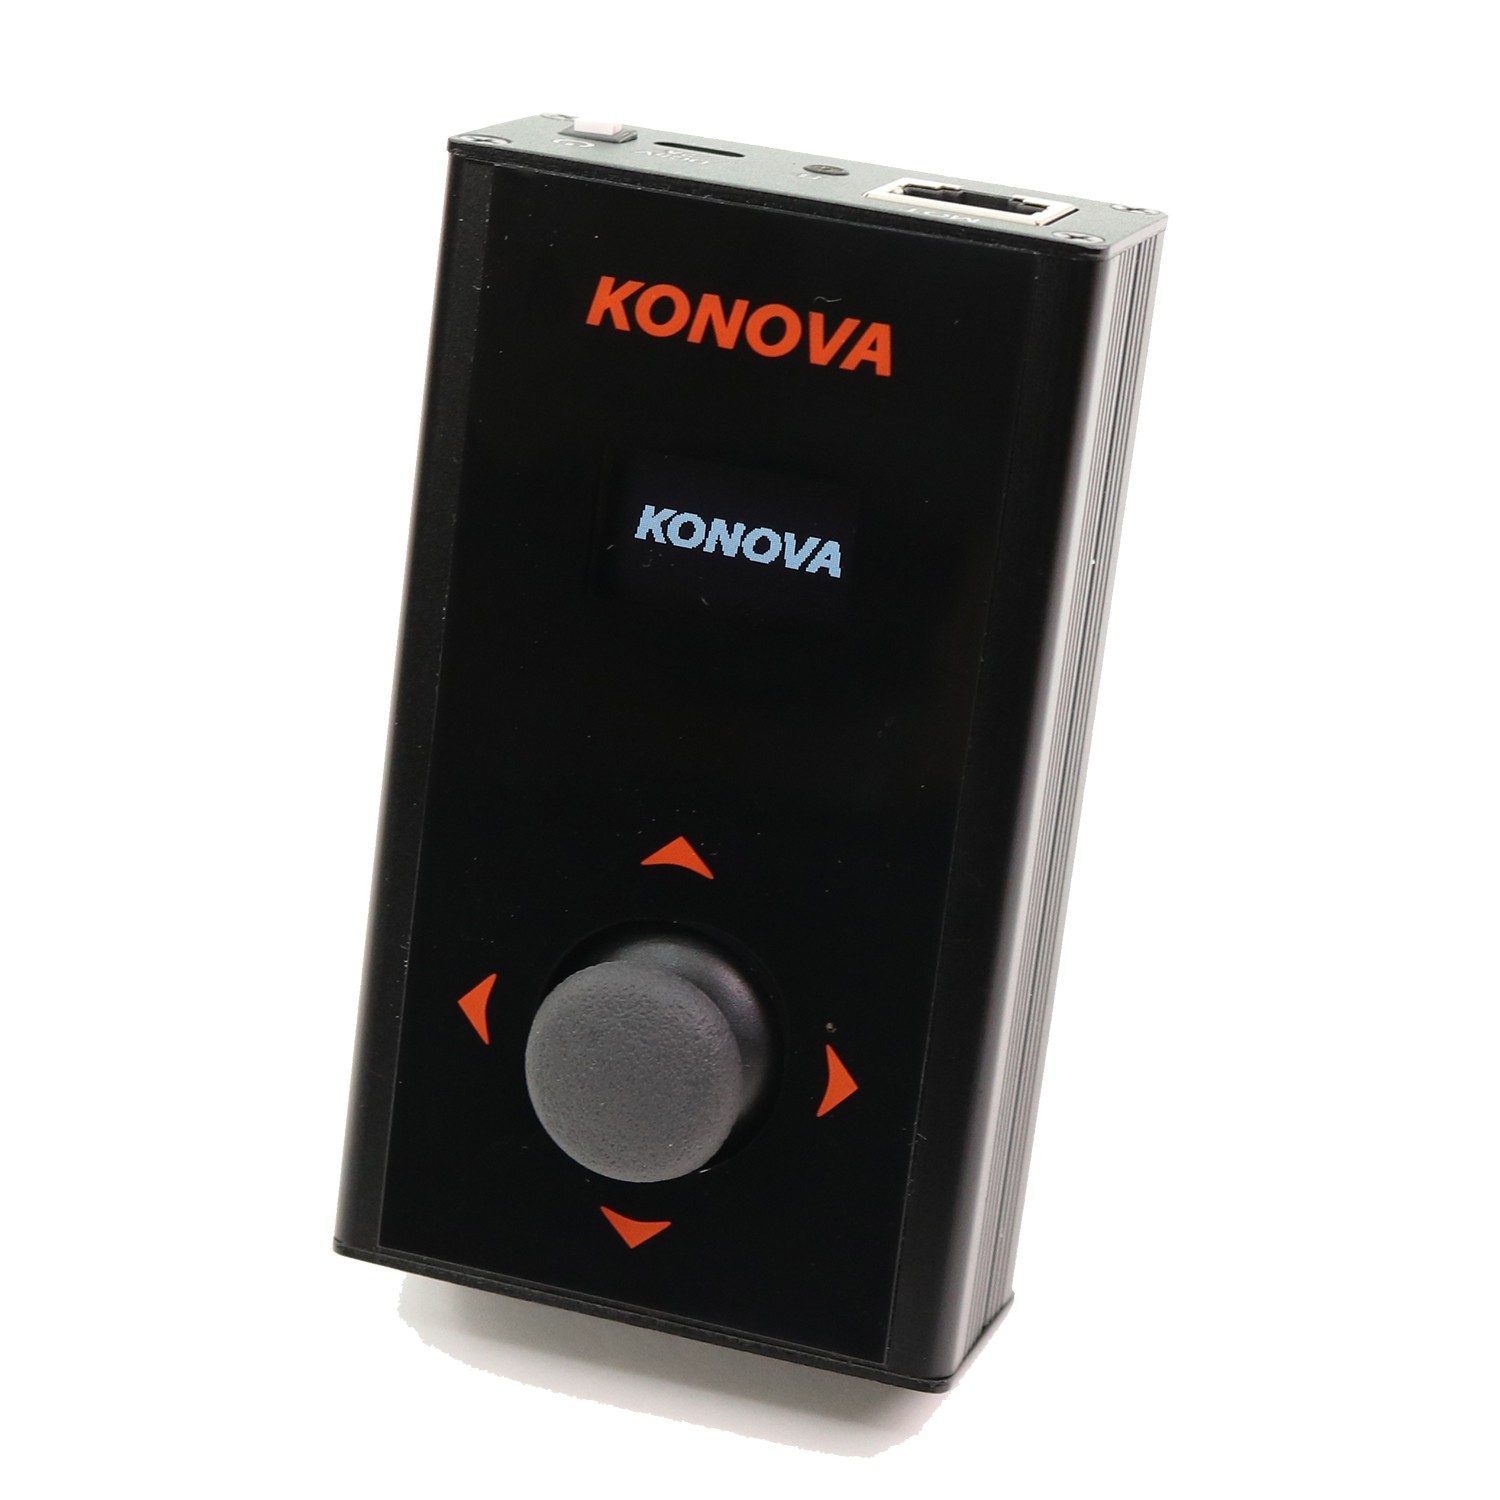 KONOVA Motorized Kit KMS S2 ชุดมอเตอร์รางสไลด์ ถ่าย Timelapse ราคาร 7900 บาท